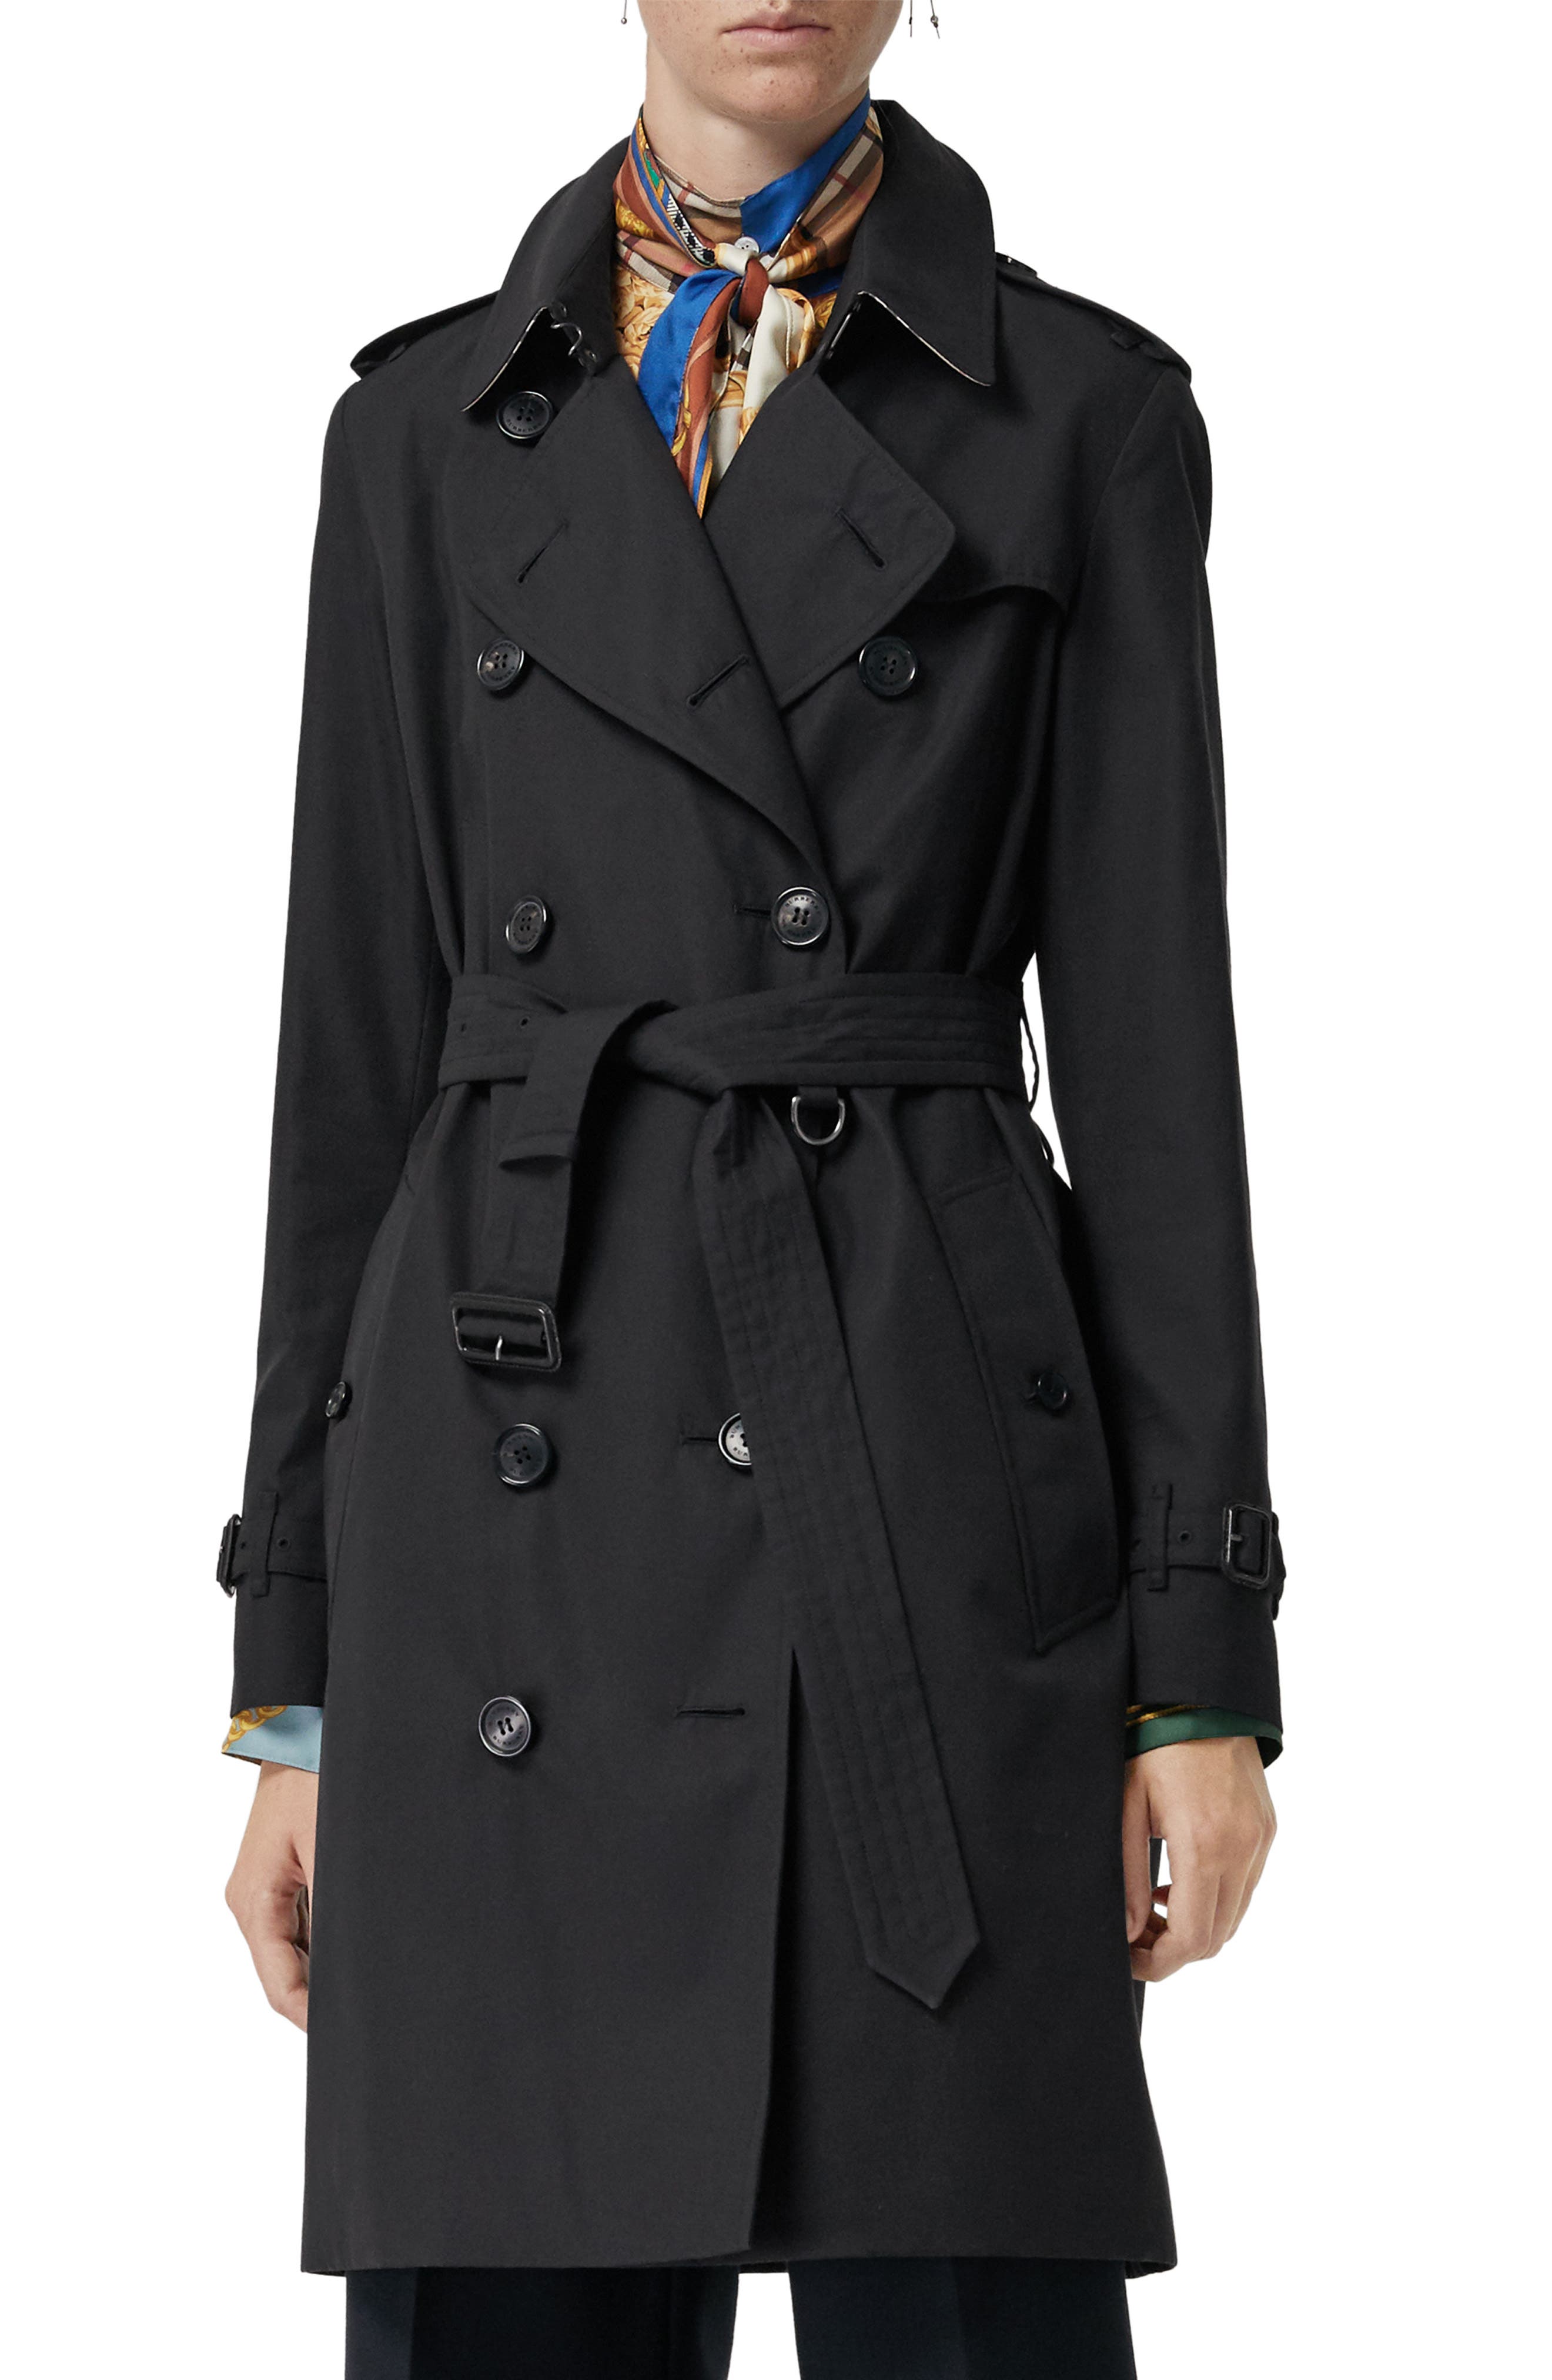 burberry coats on sale womens